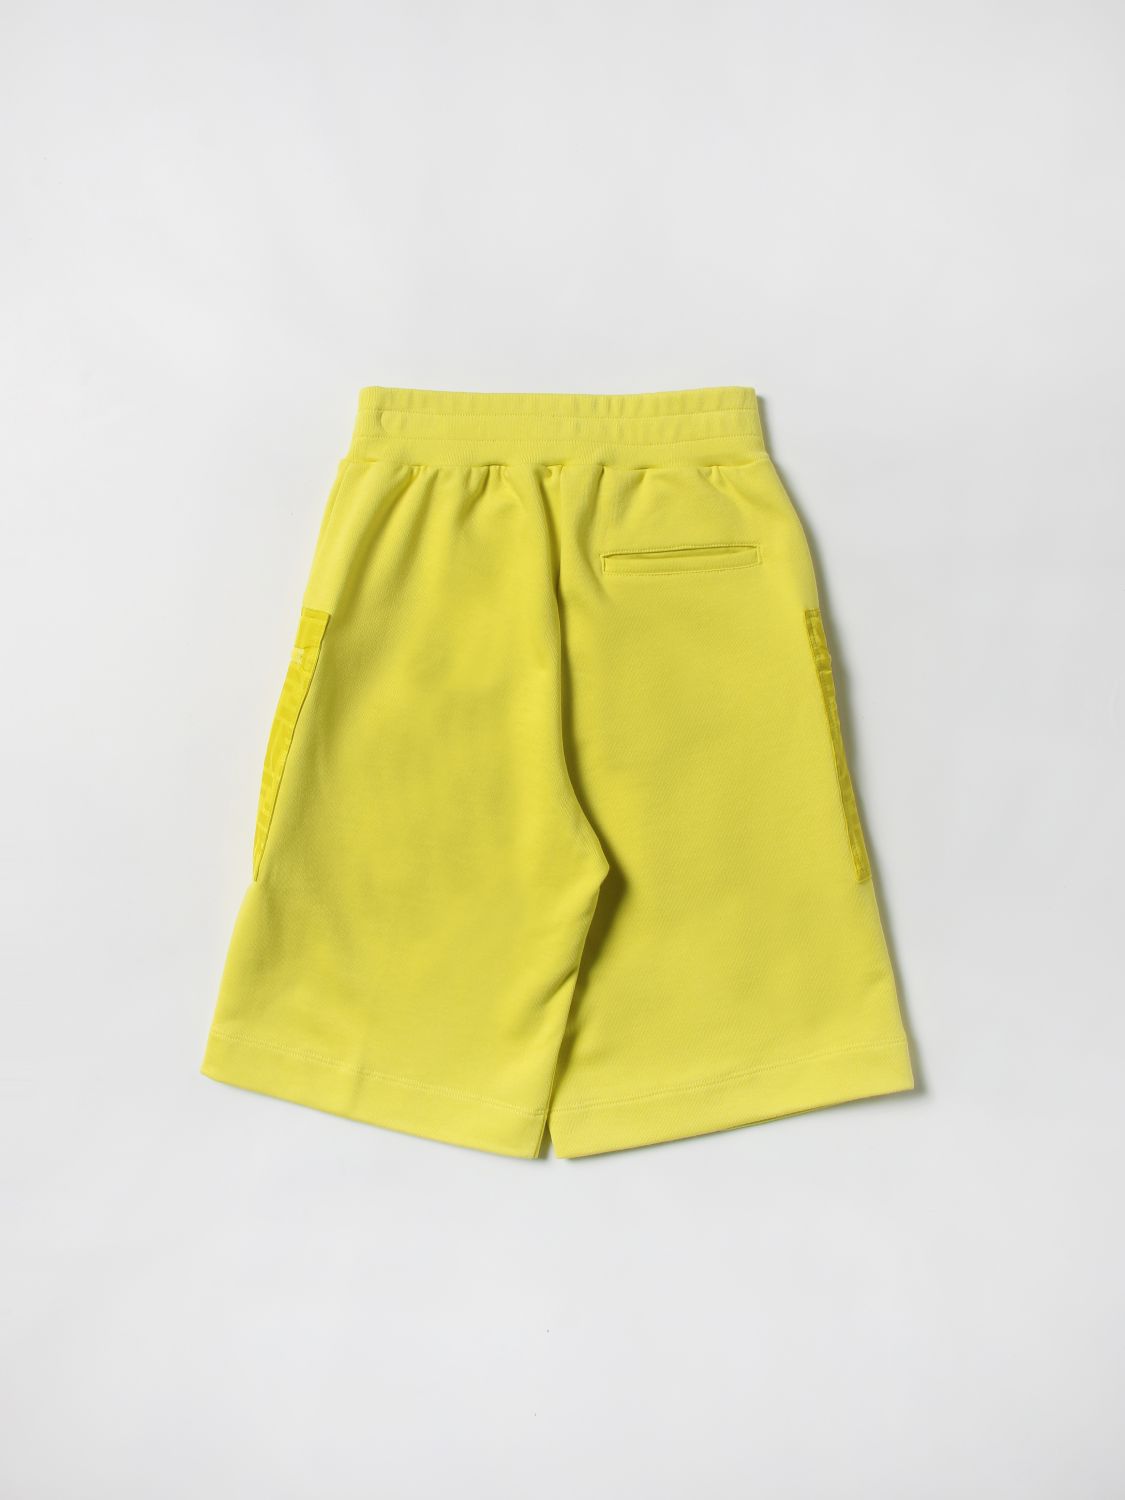 Shorts Fendi: Fendi shorts for boys yellow 2